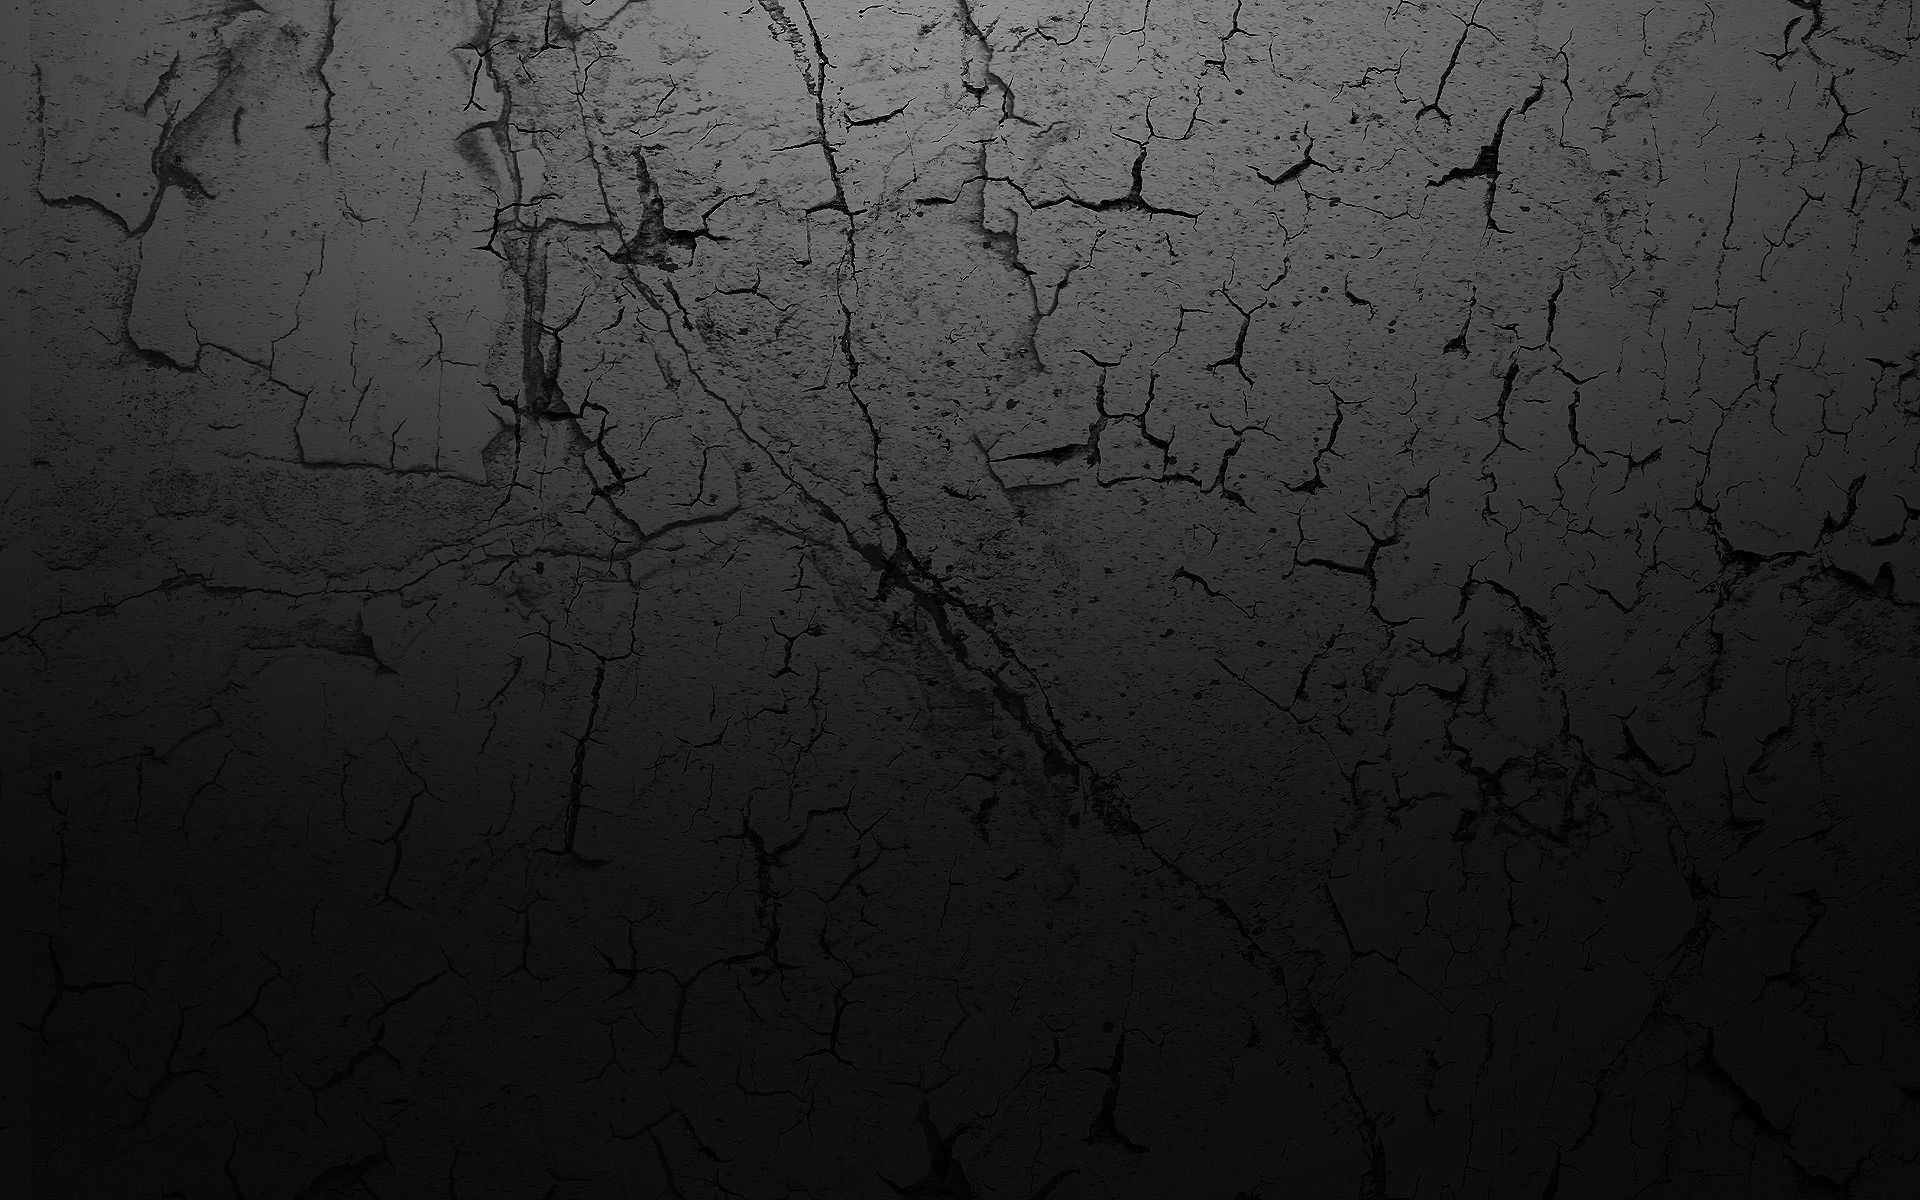 Black Asphalt Wall with Cracks Photo Texture & Background